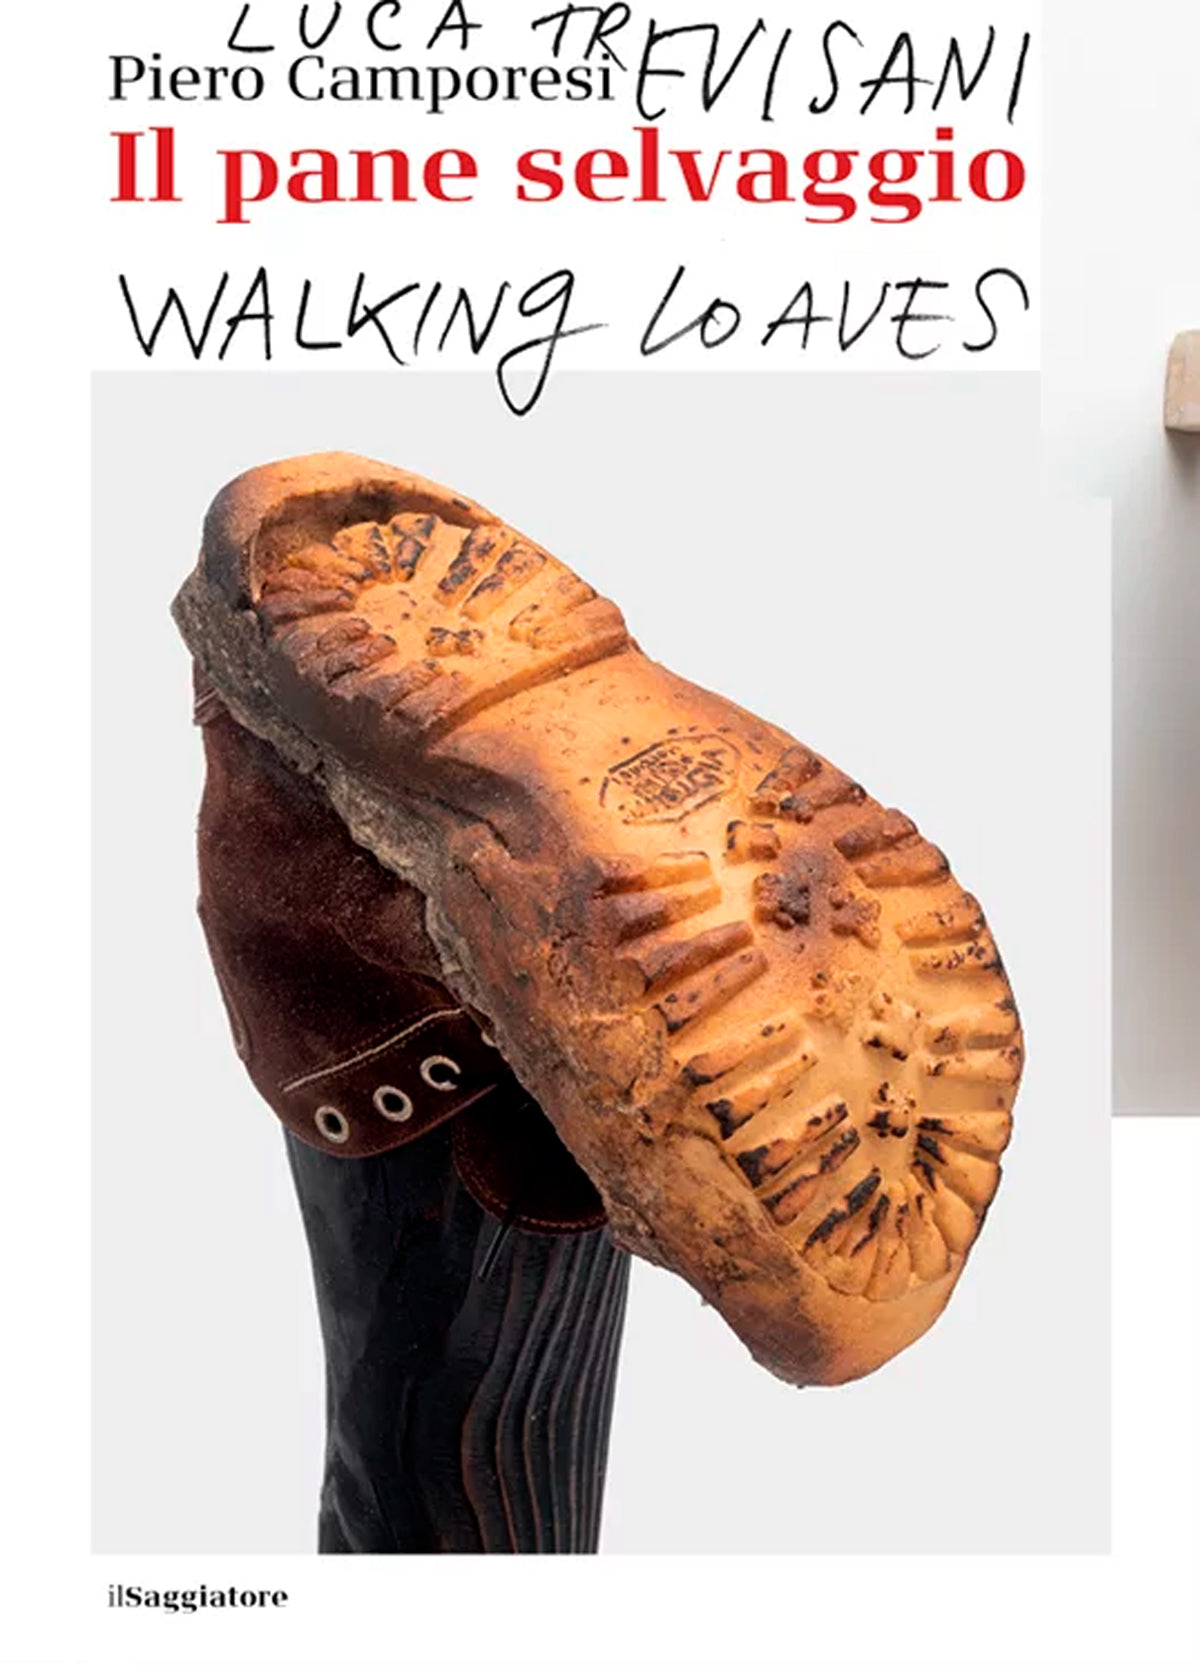 Walking loaves